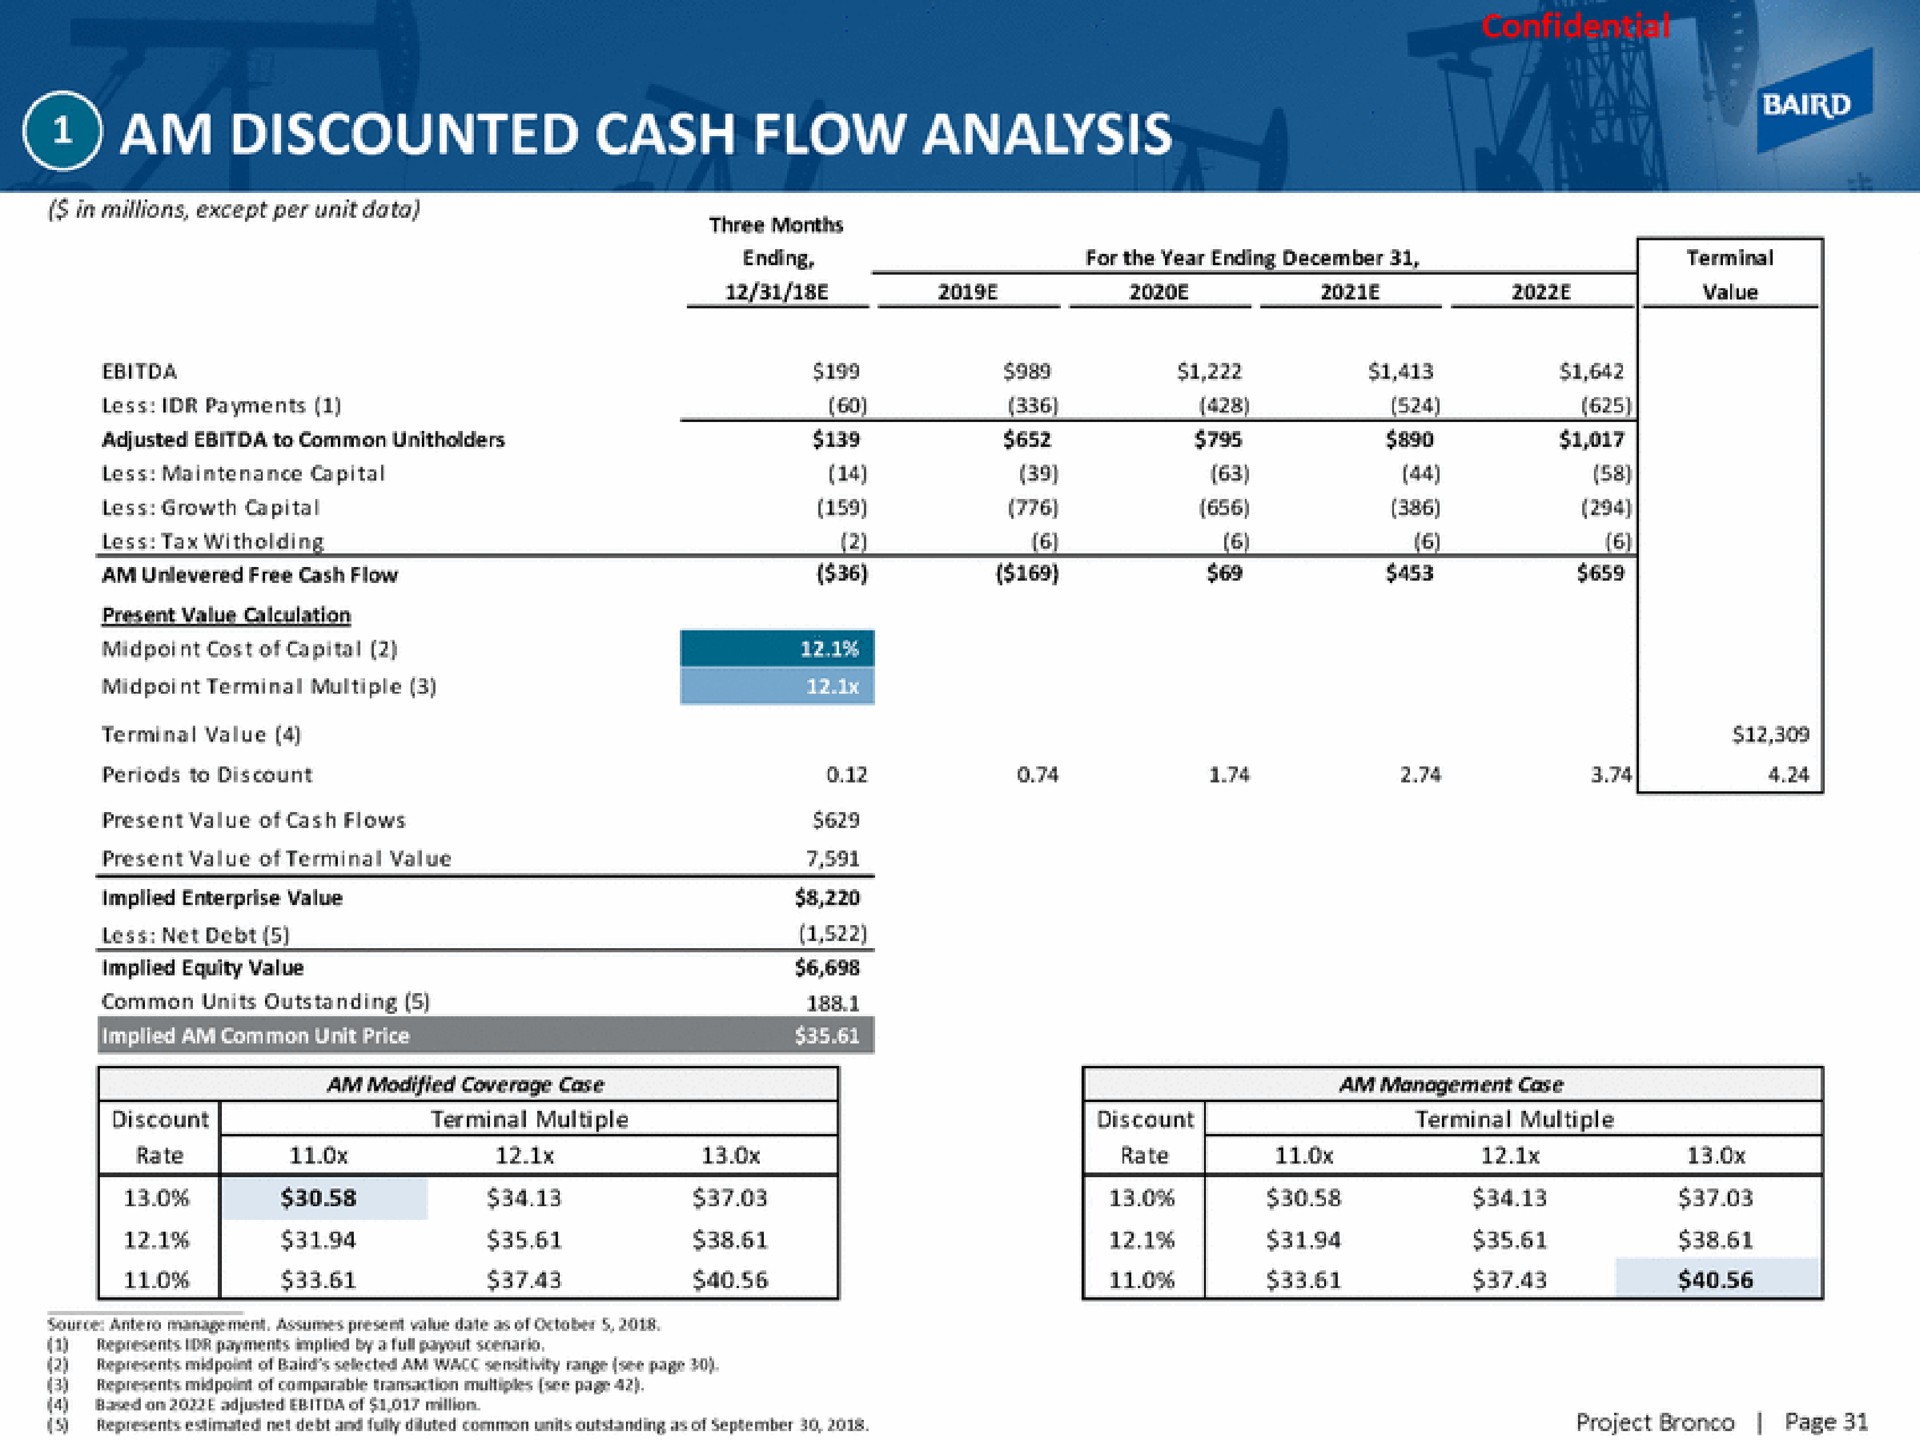 am discounted cash flow analysis | Baird